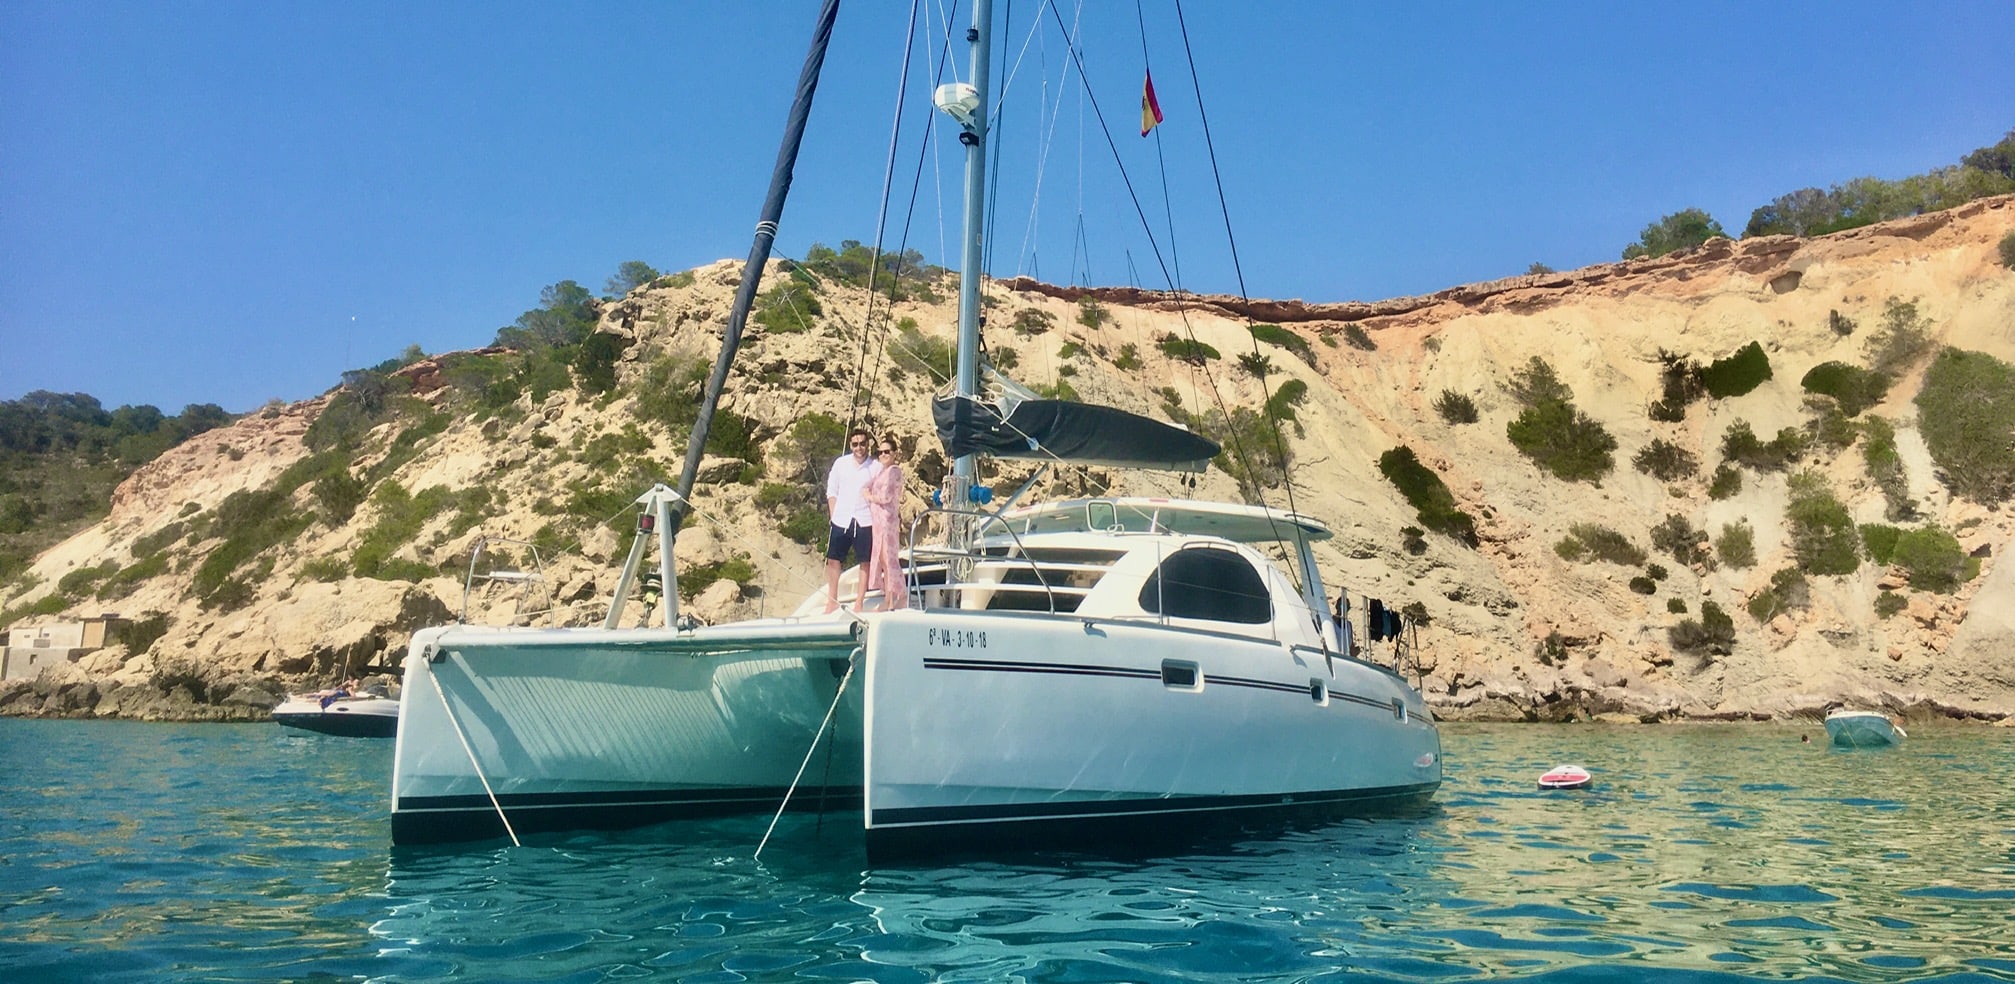 Hooney moon Catamaran Ibiza, our catamaran Gerononimo